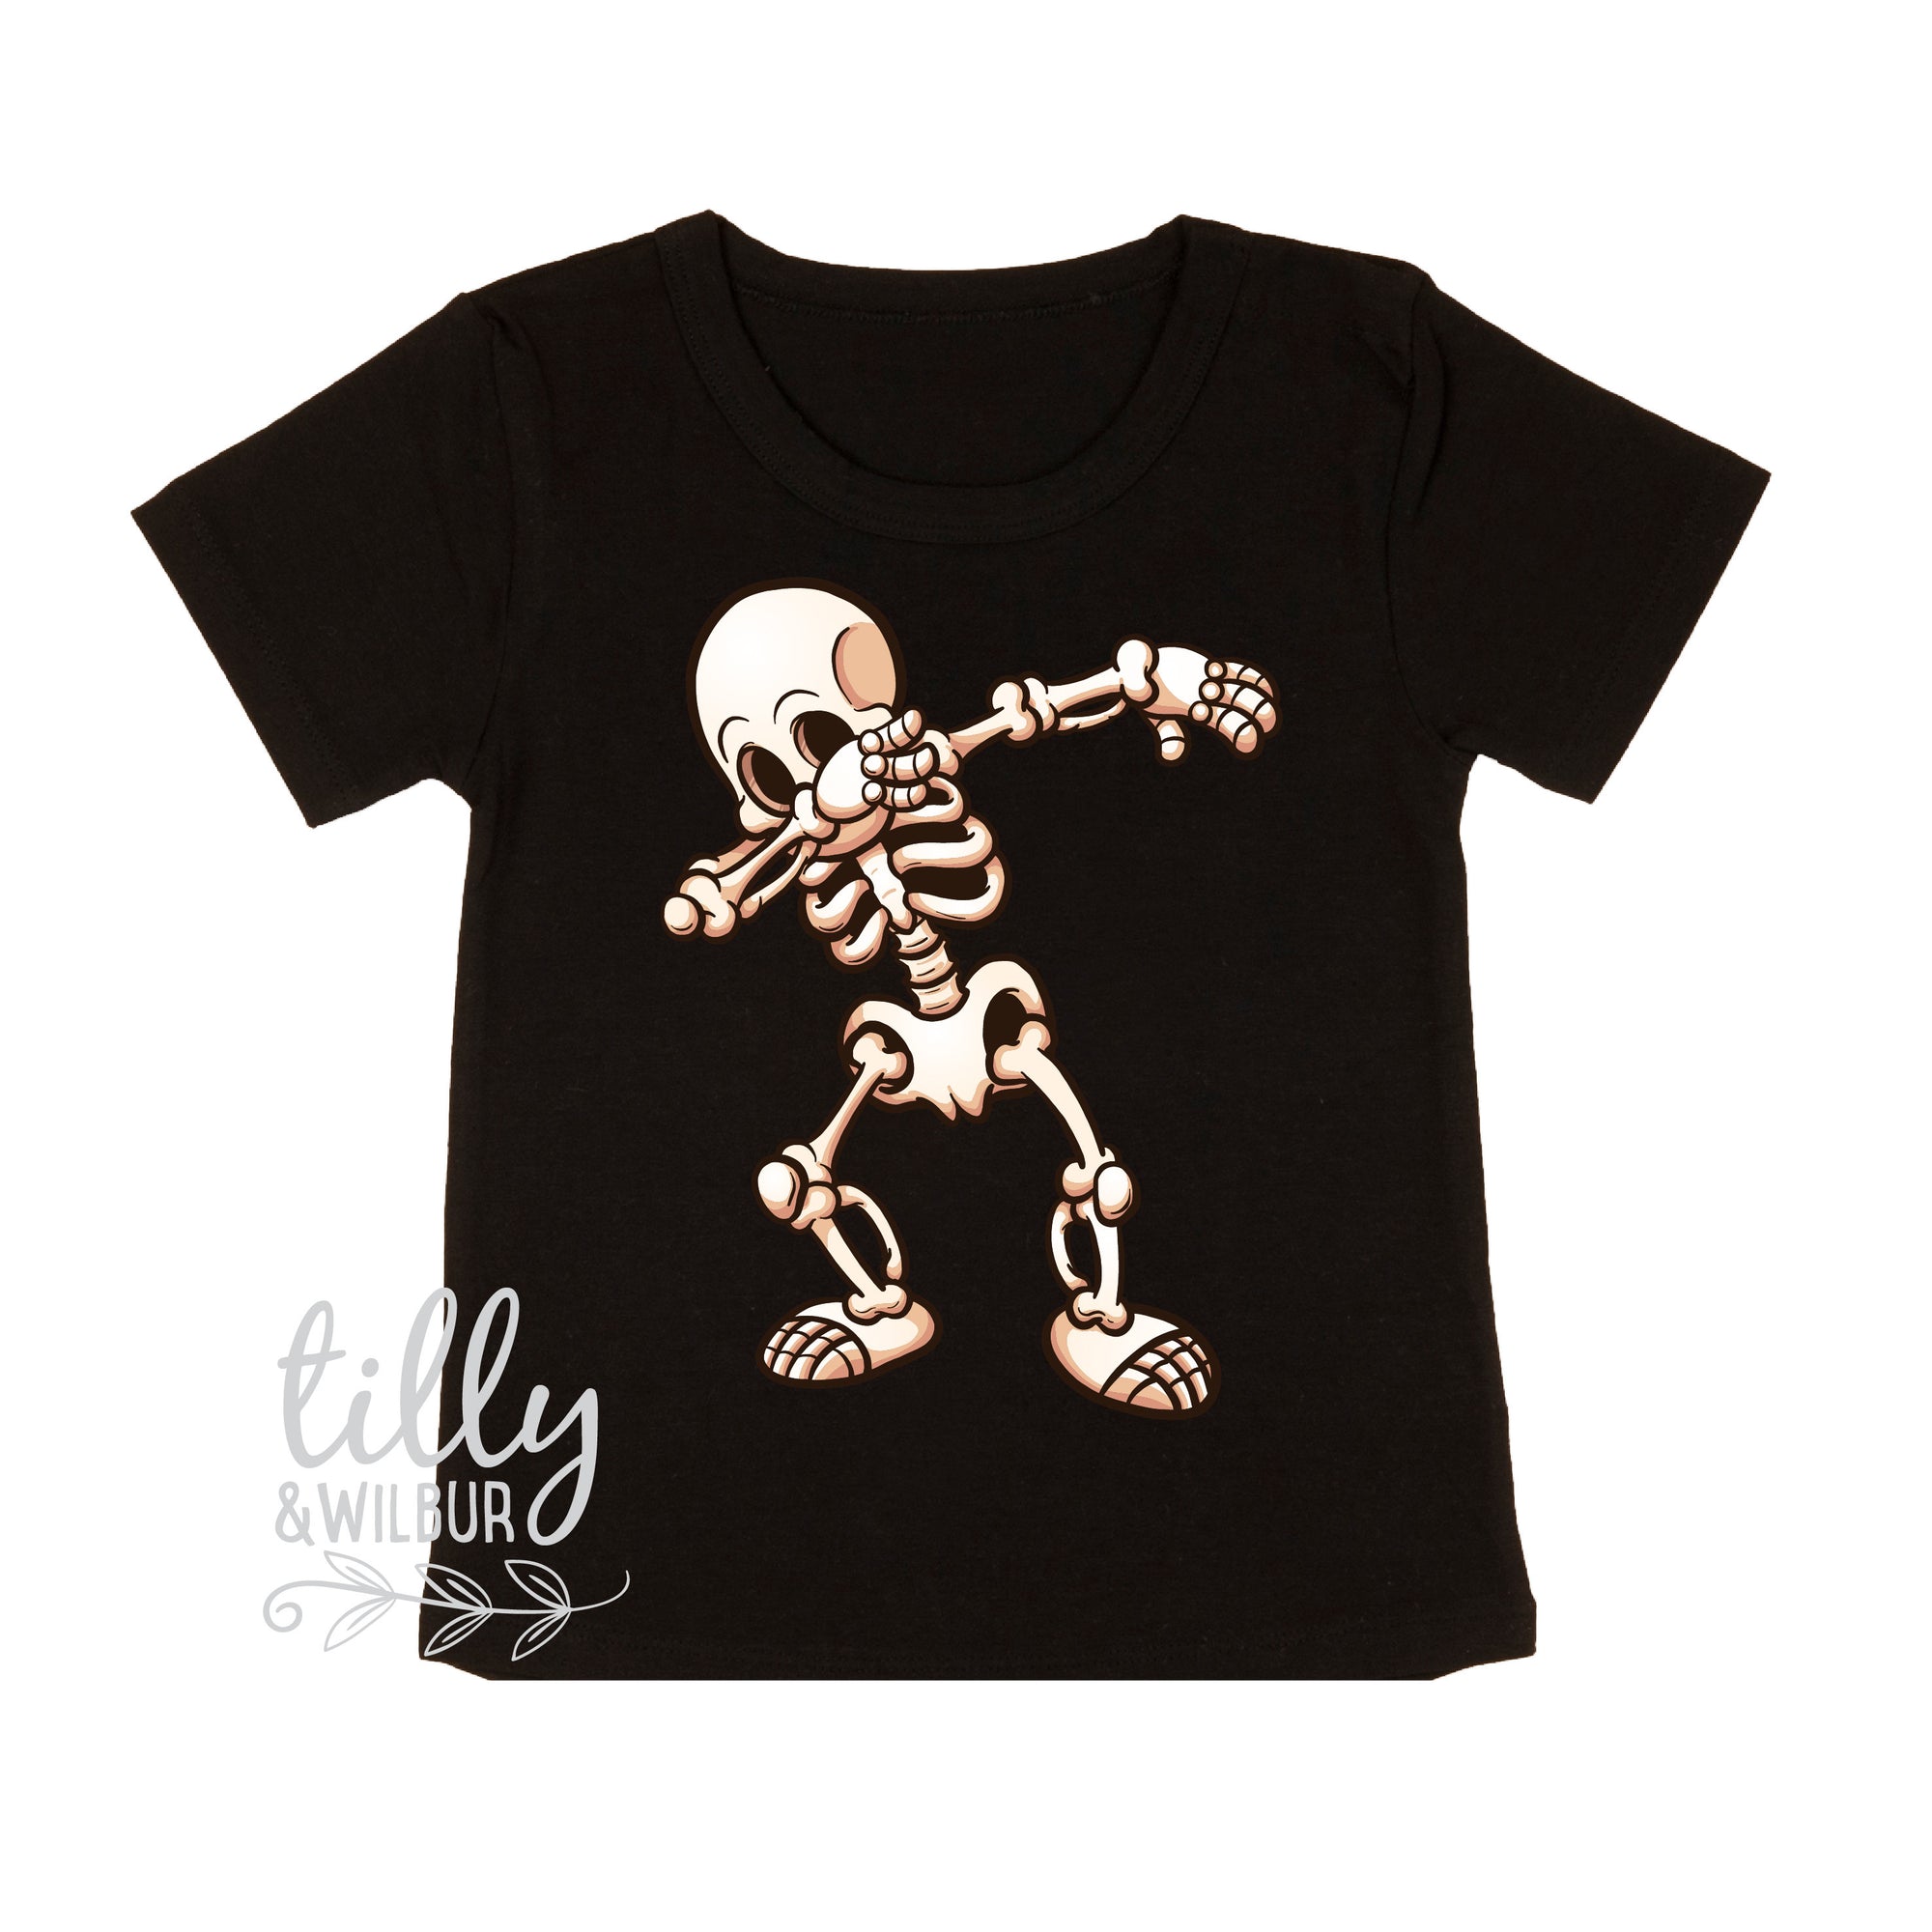 Dabbing Skeleton Halloween T-Shirt For Boys, Halloween Costume, Dab, Dabbing Skeleton, Boys Halloween Costume, Skeleton T-shirt, Halloween